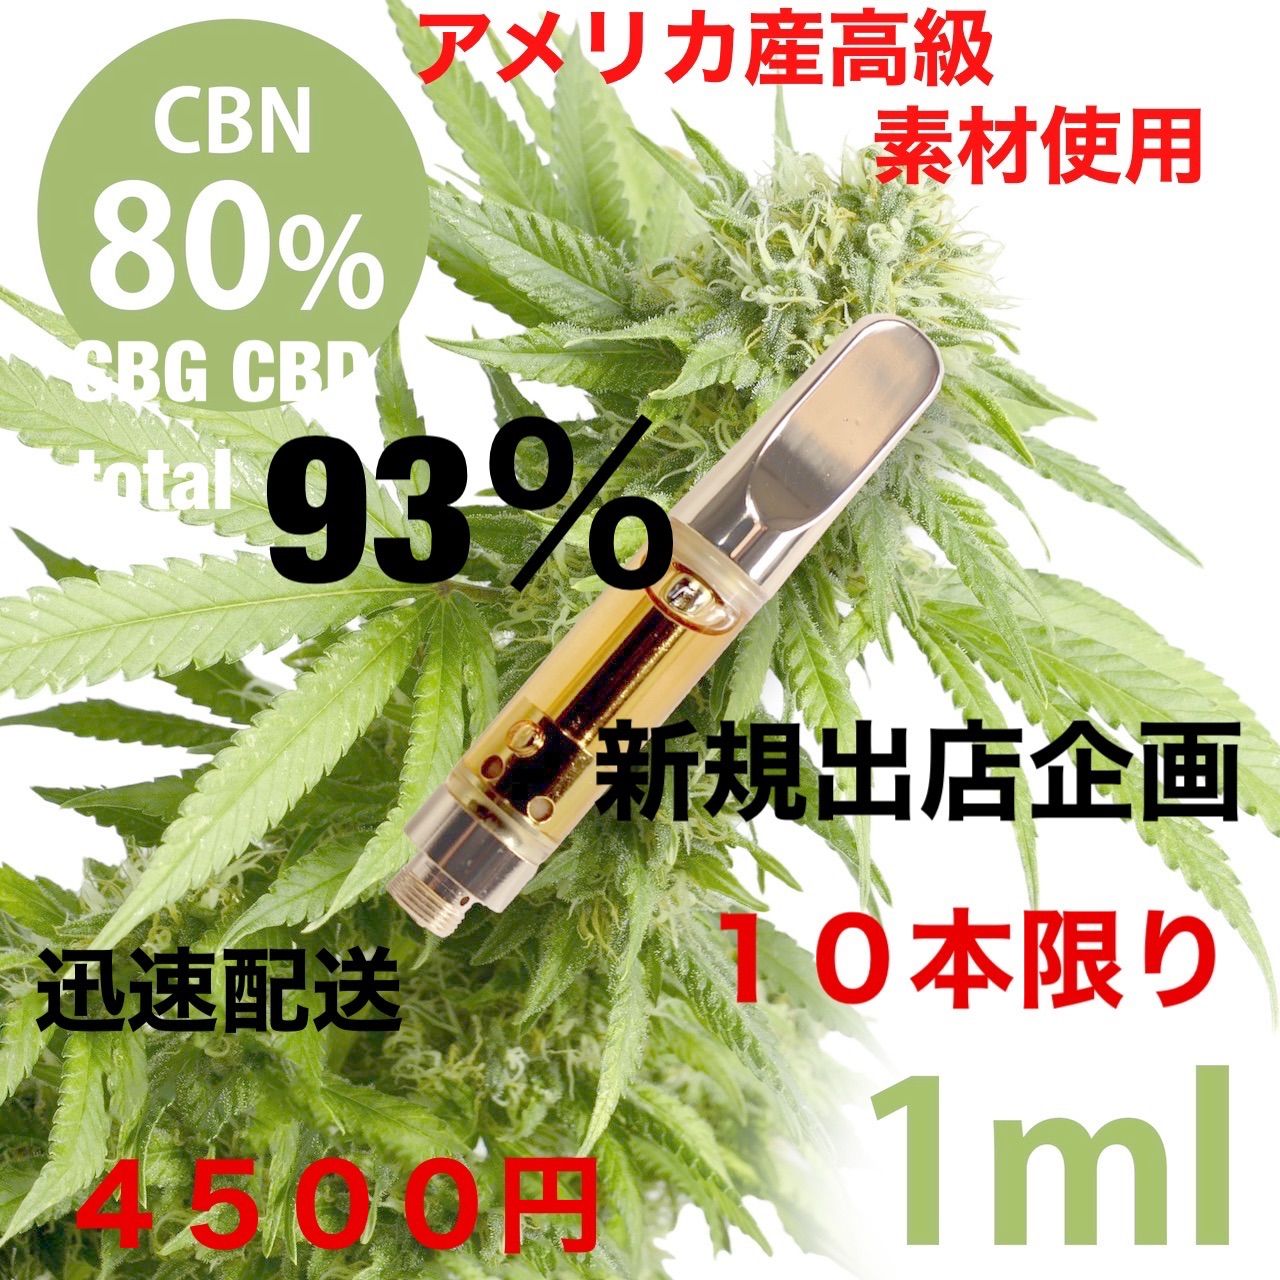 ● 142 CBN 80% リキッド 2本OGKUSH 高級麻由来テルペン使用